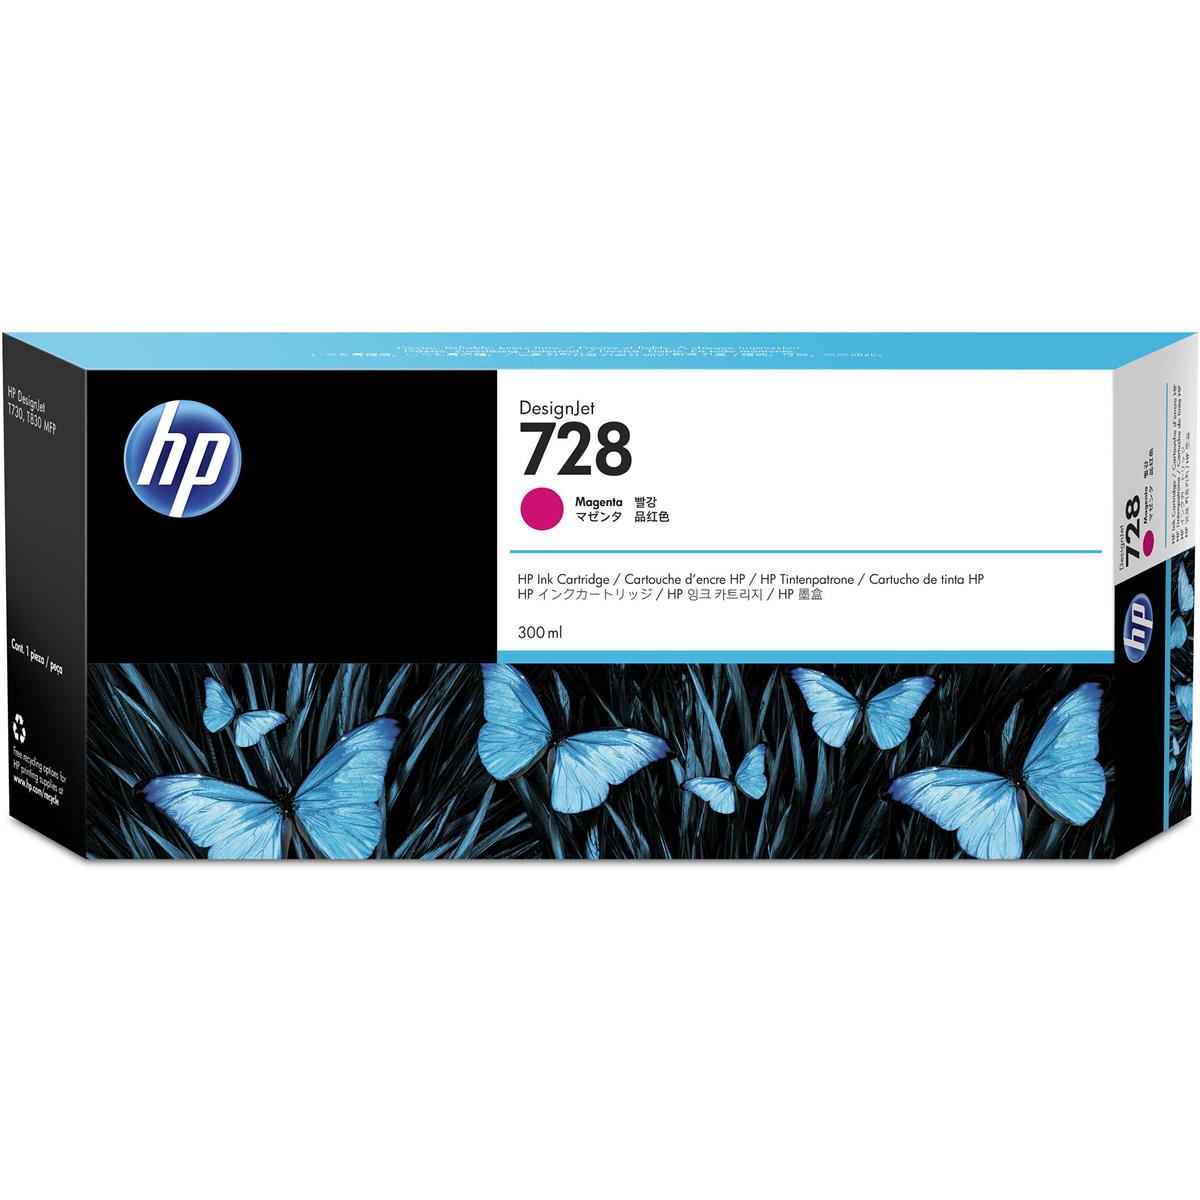 

HP 728 300ml Magenta Ink Cartridge for DesignJet T730 and T830 Inkjet Printers